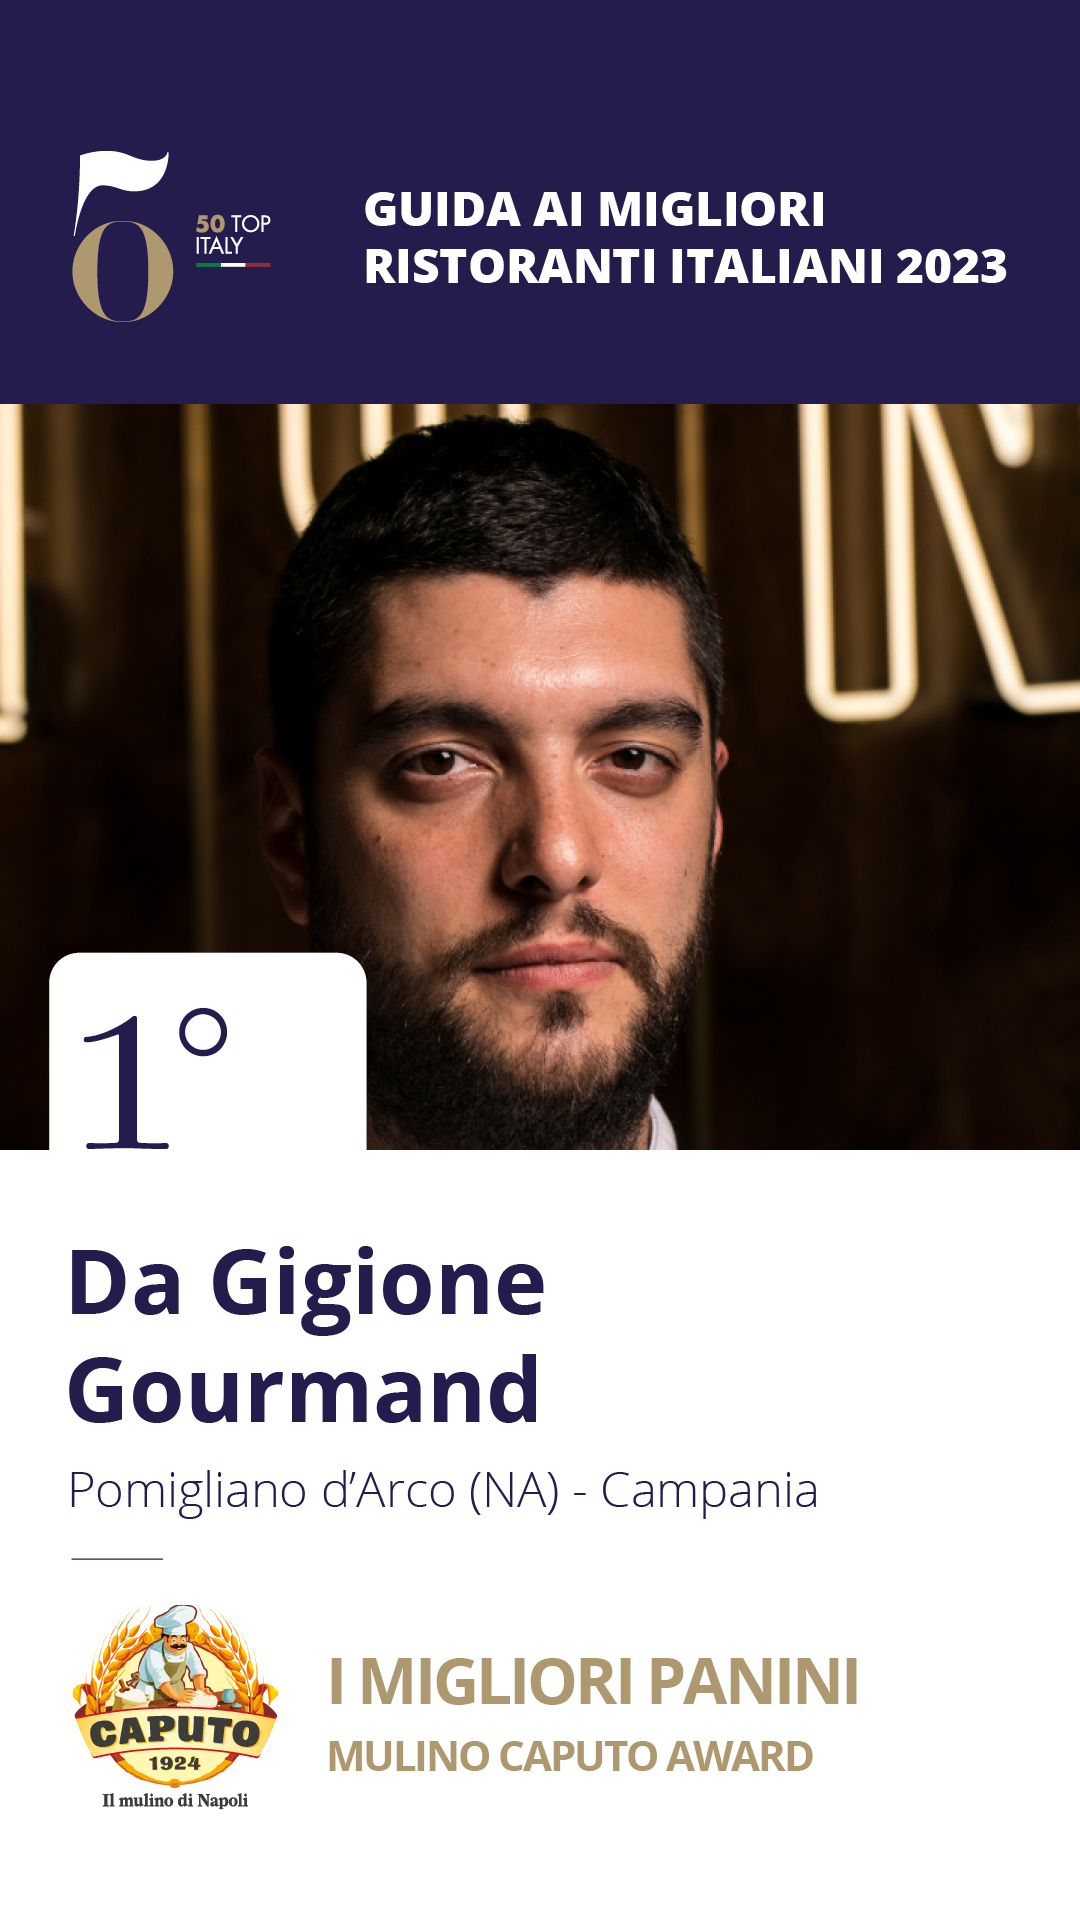 1 - Da Gigione Gourmand - Pomigliano d'Arco (NA), Campania